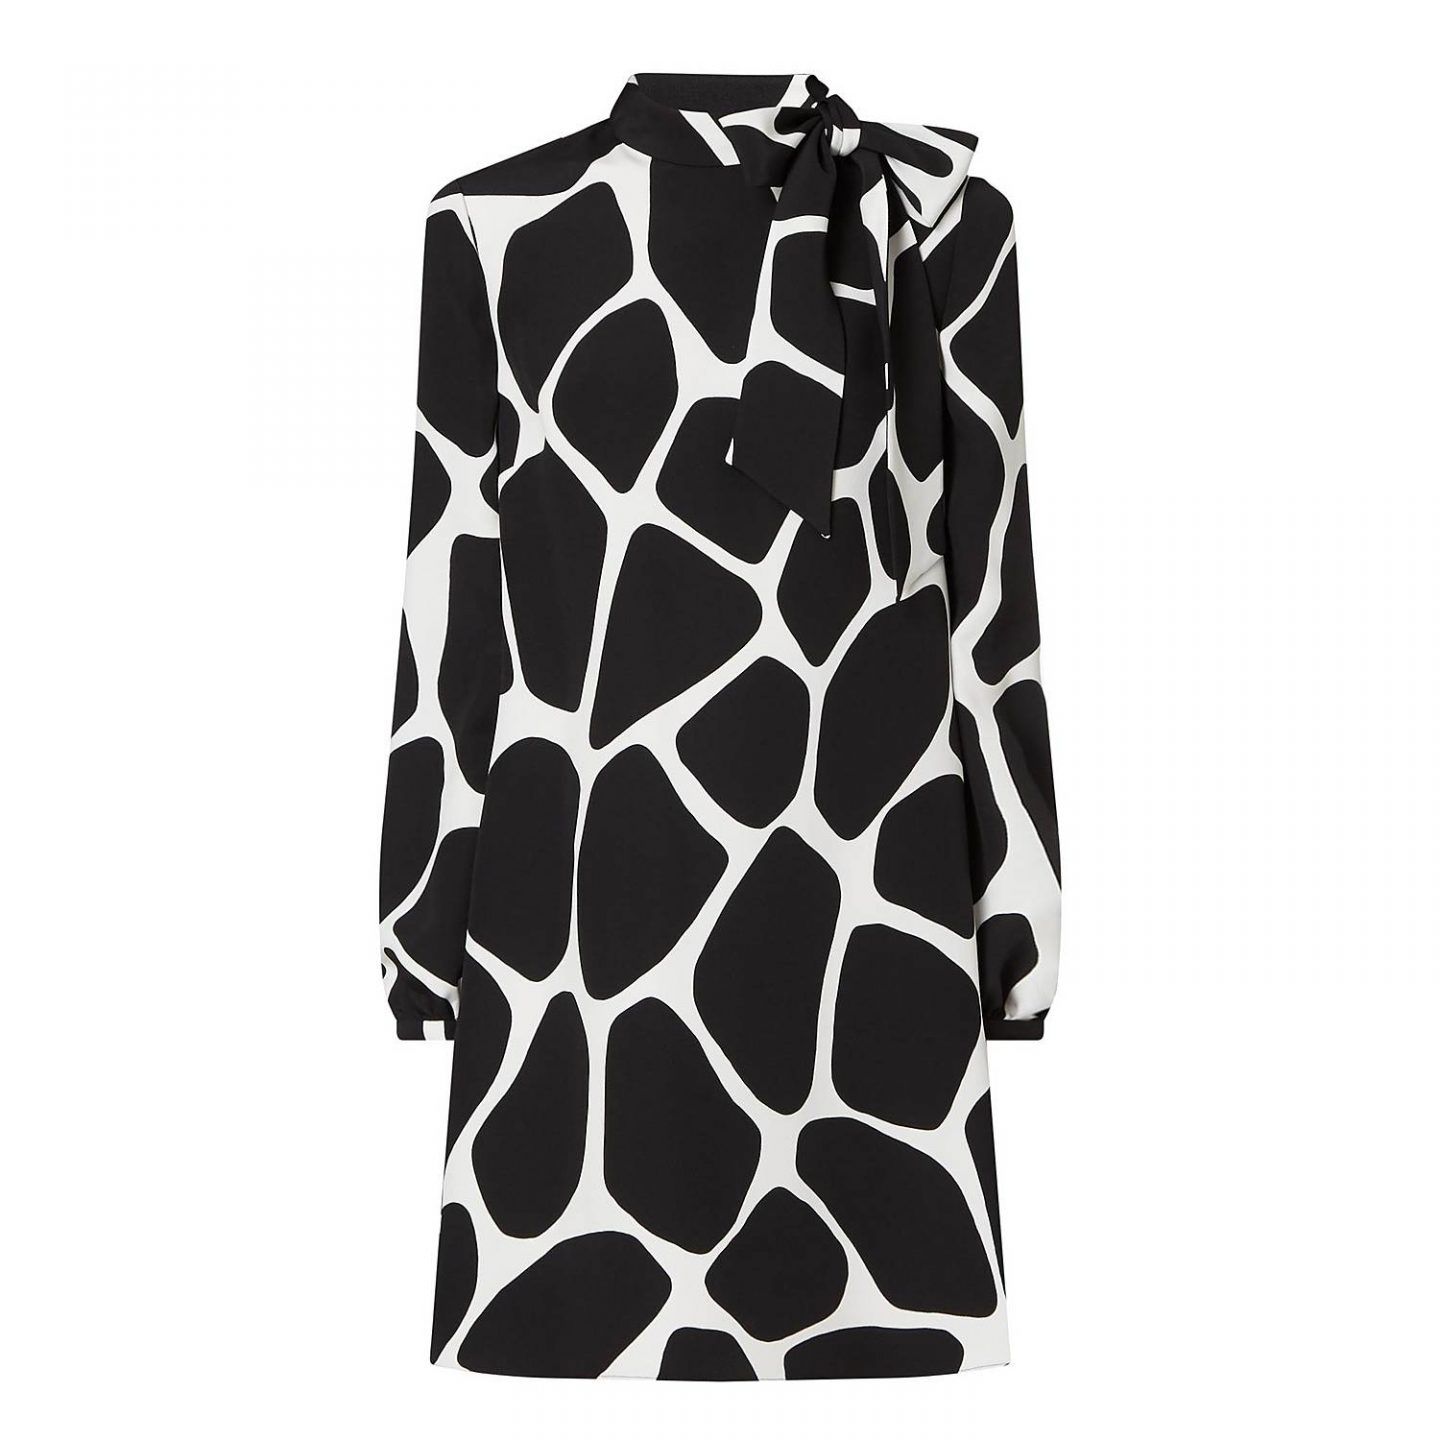 Valentino Cady_Giraffe_Print_Dress €2490(1)(1)